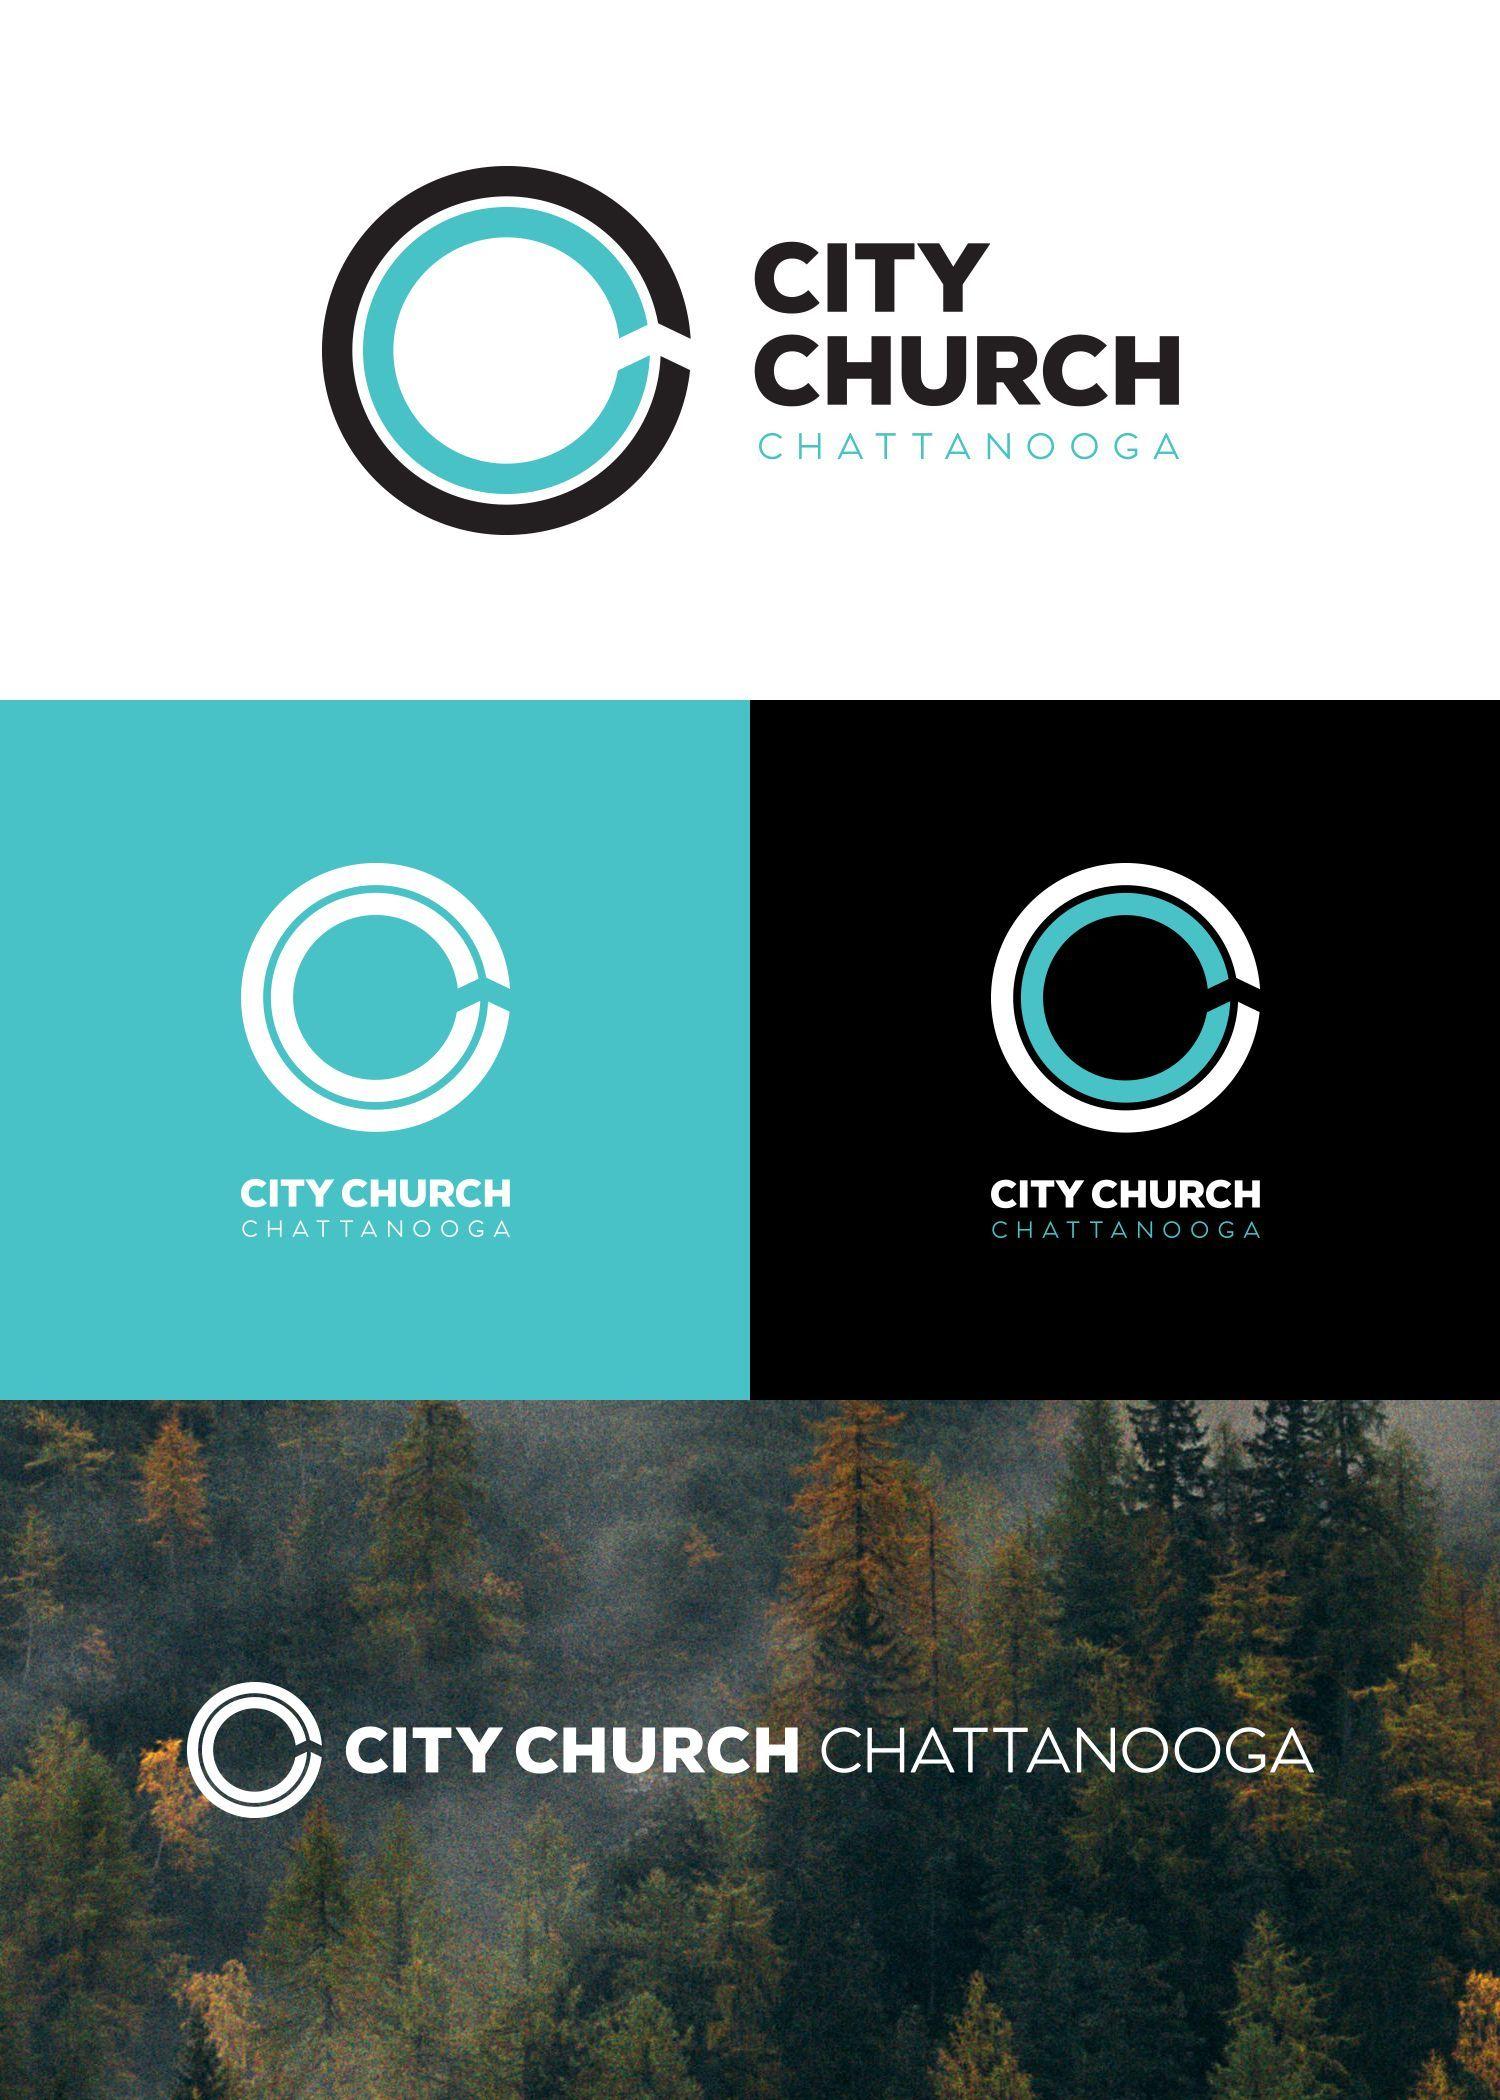 Circle Church Logo - Chattanooga, City Church | Art & Design Inspiration | Pinterest ...